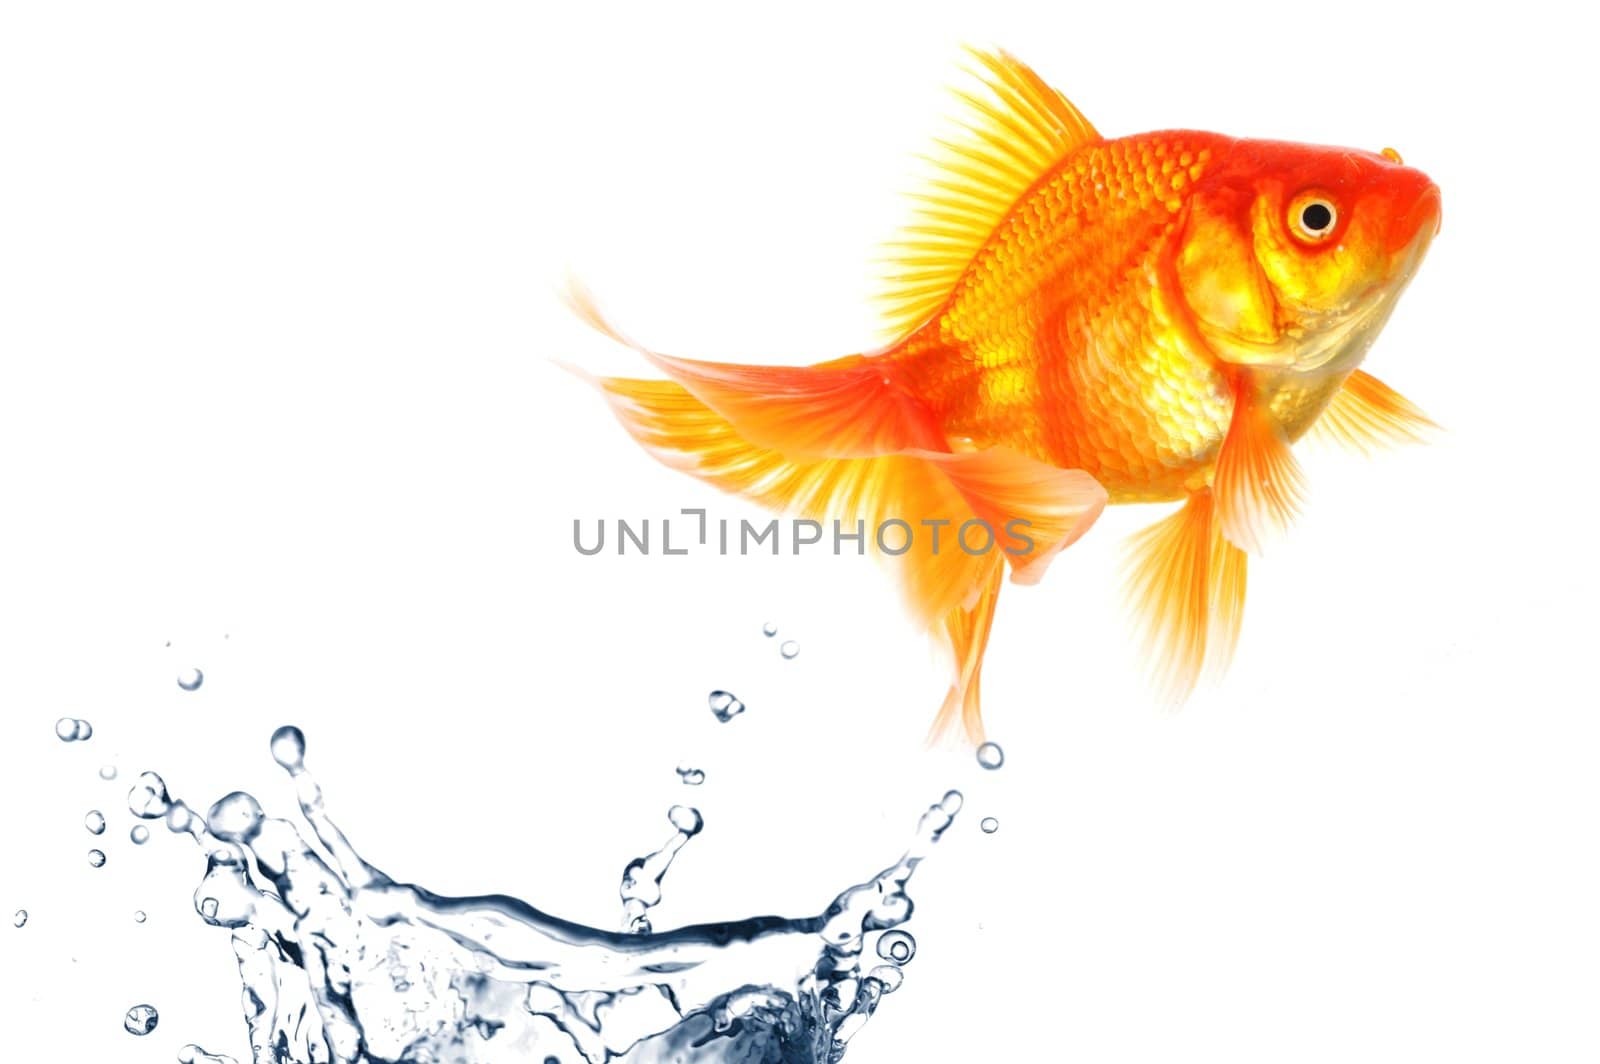 goldfish jumping with water splash isolated on white background